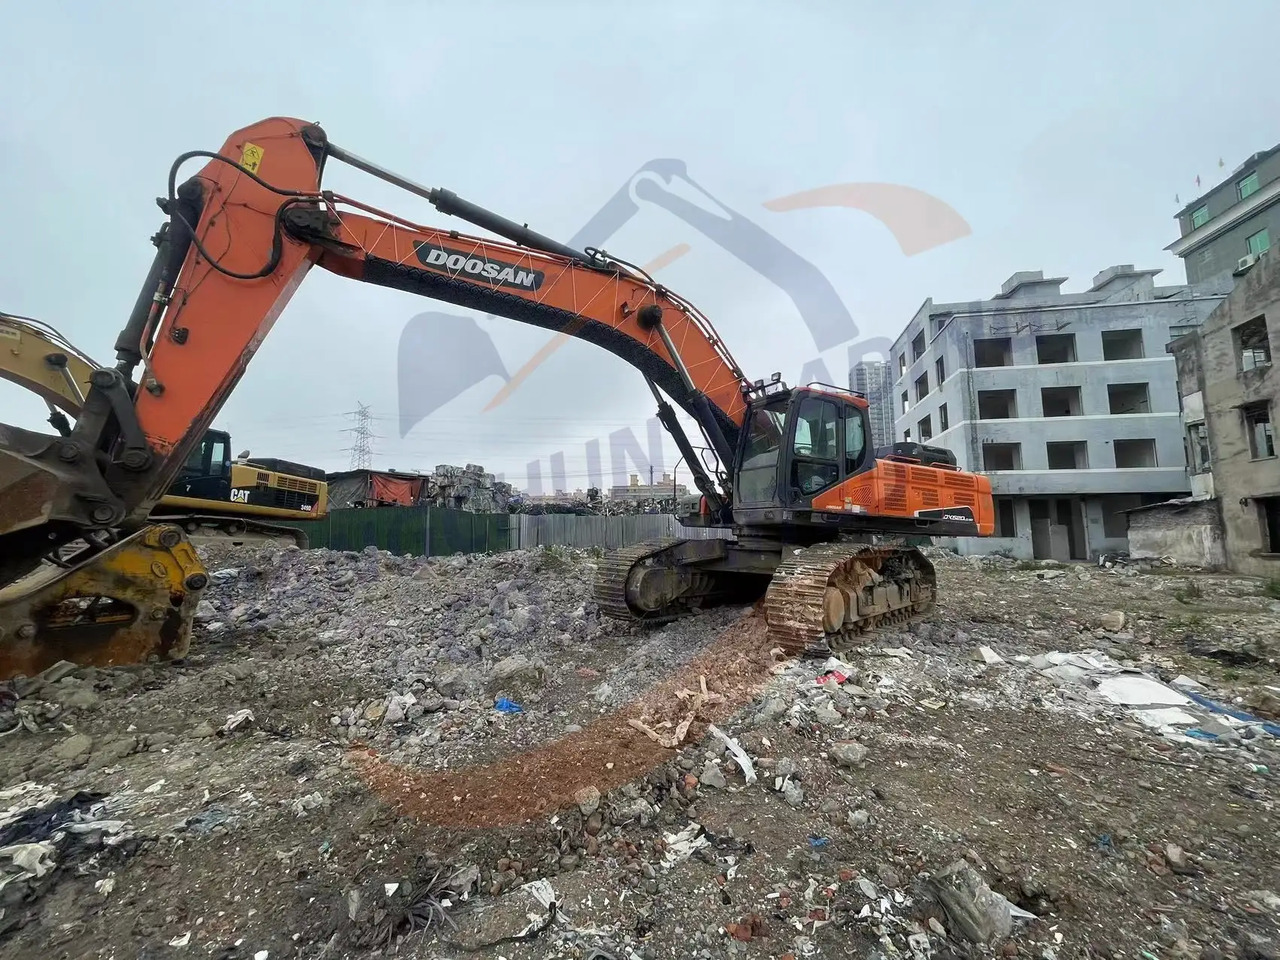 Гусеничный экскаватор Low running hours Used Doosan excavator DX520LC-9C in good condition for sale: фото 5